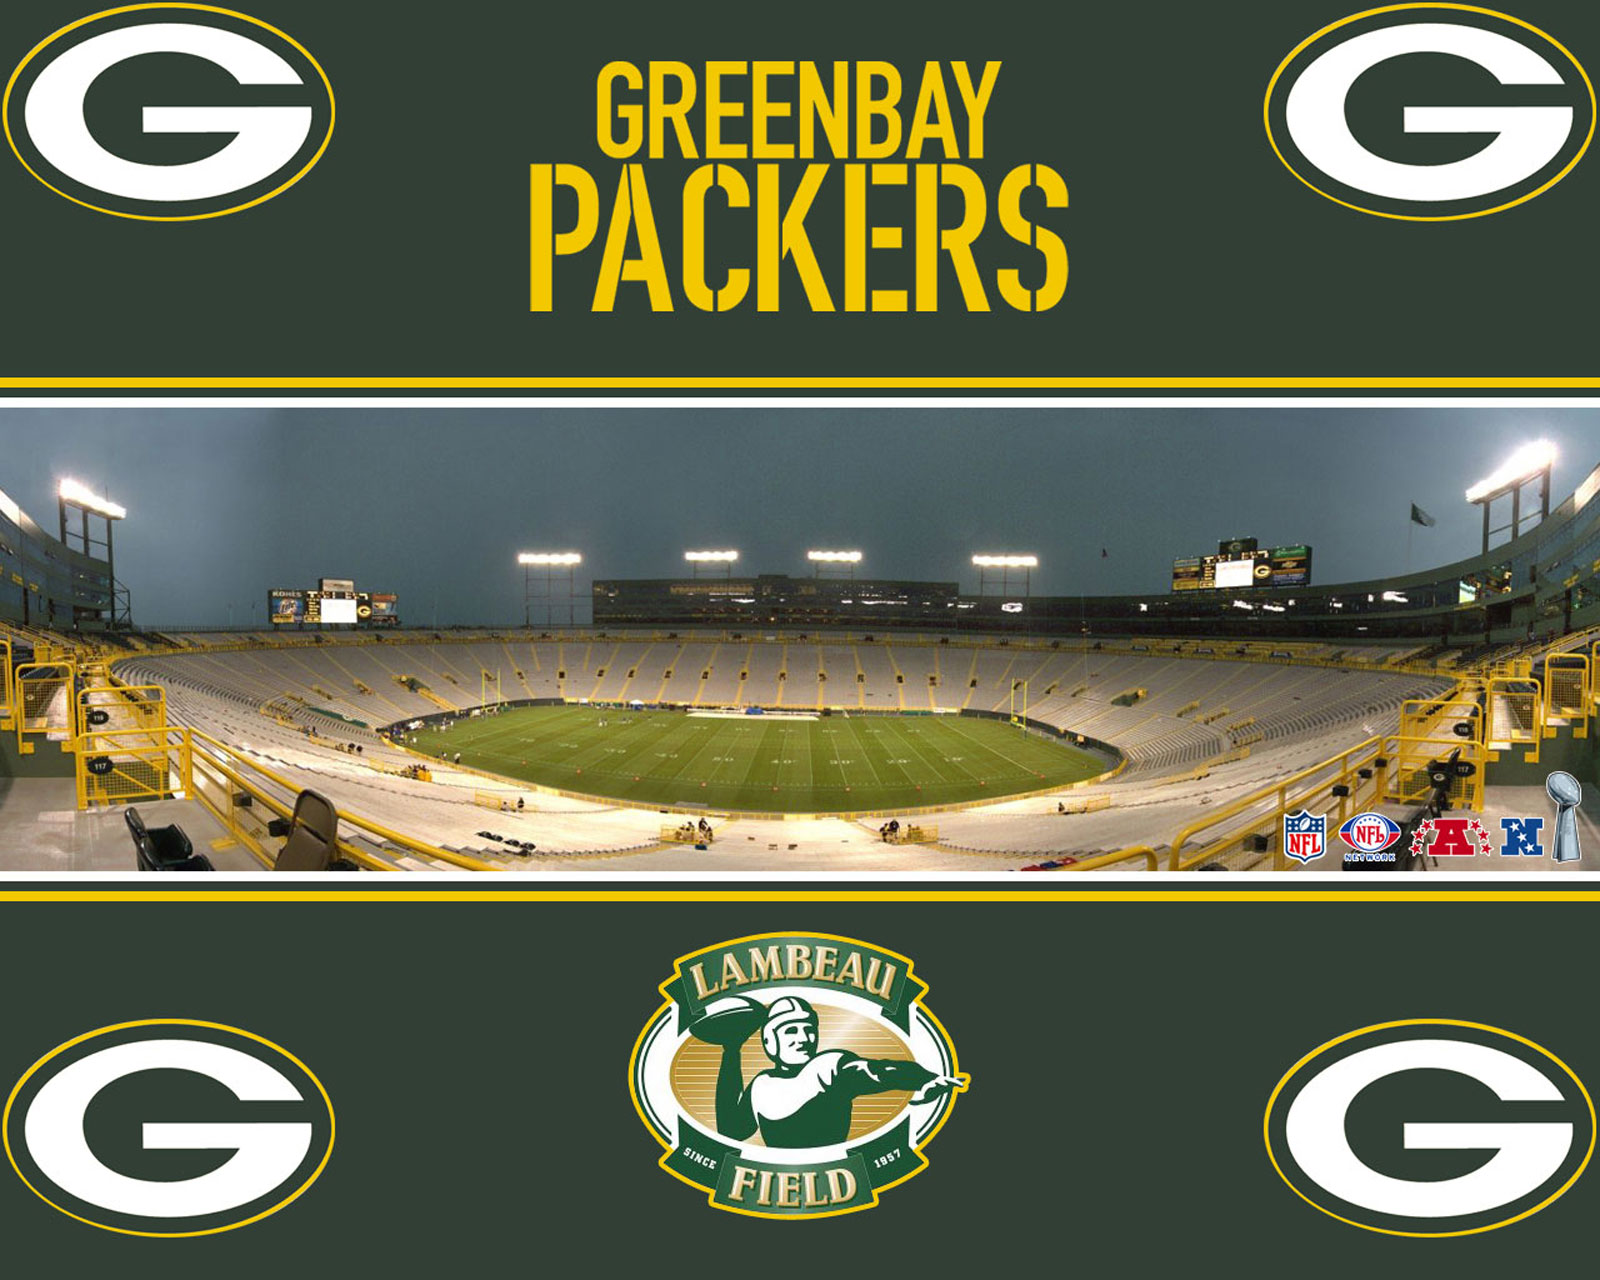 Green Bay Packers Image Lambeau Field HD Wallpaper And